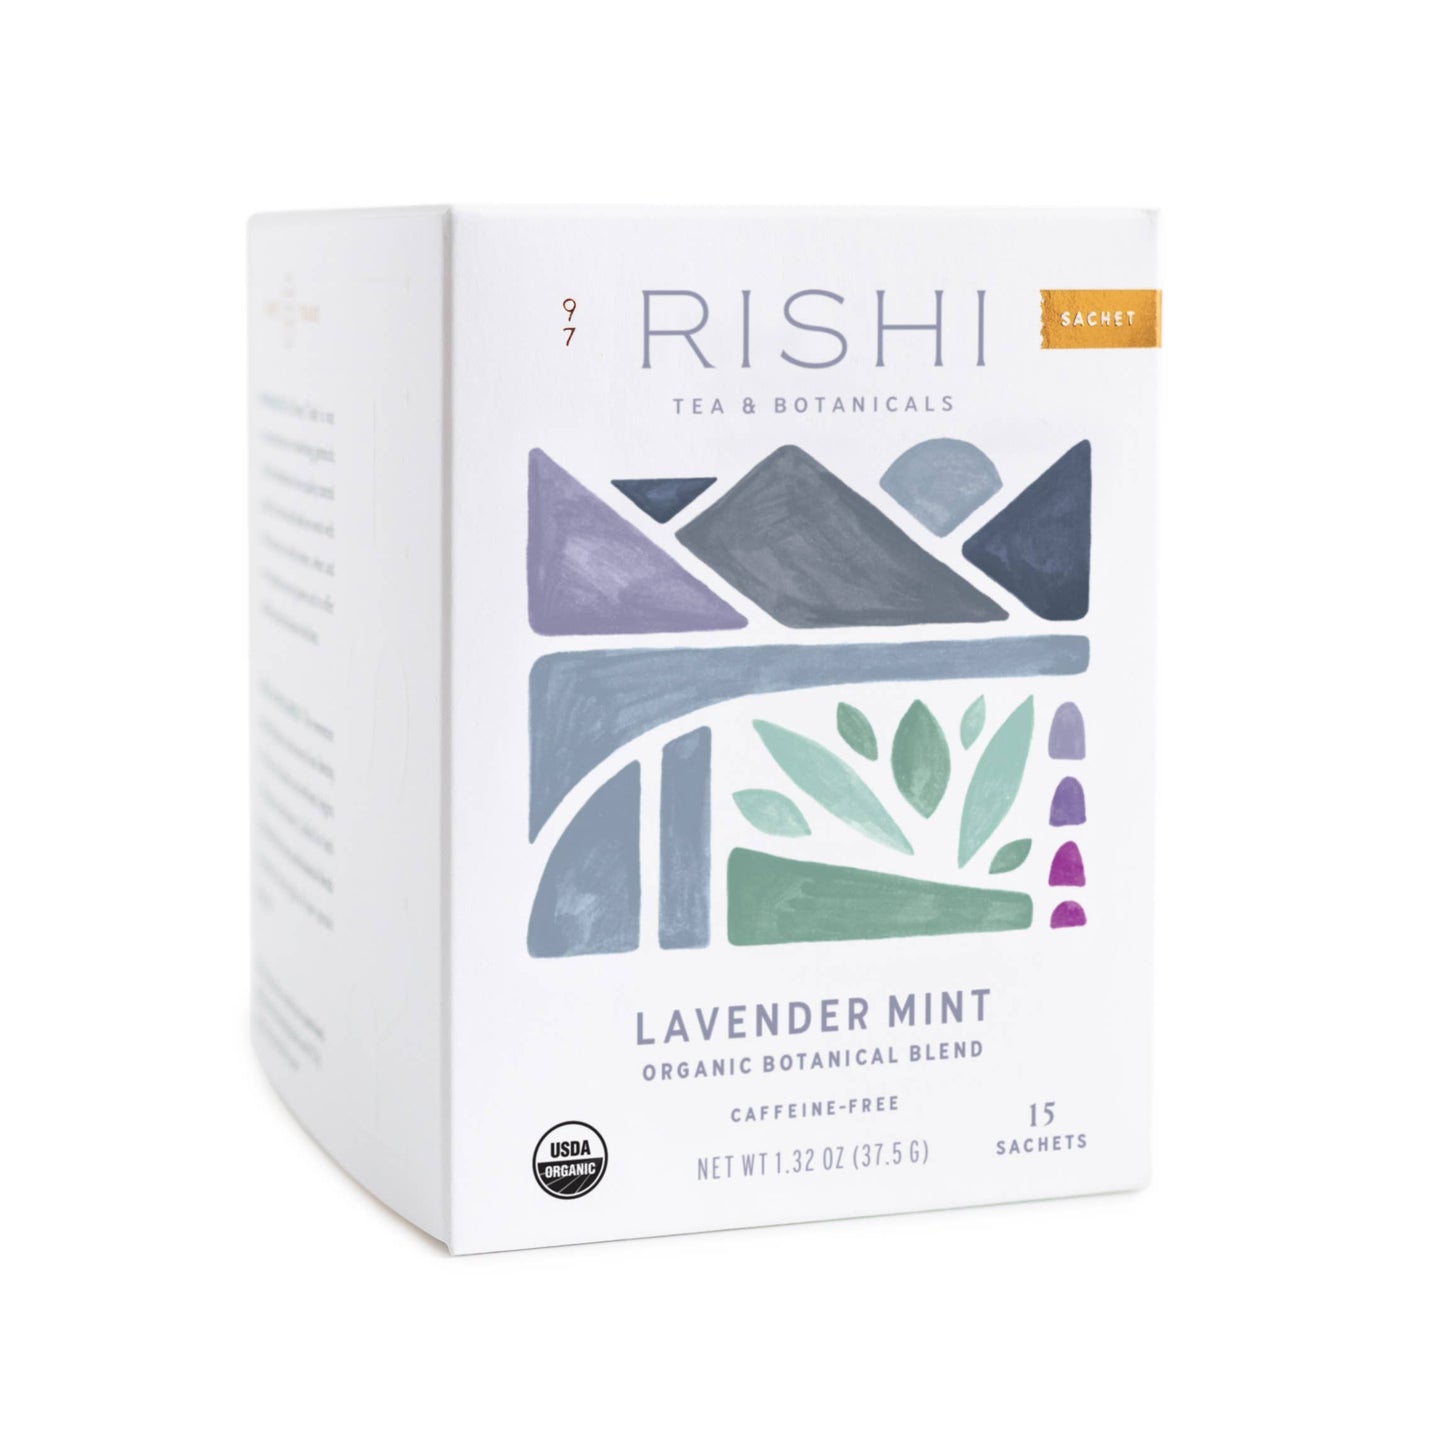 Rishi Tea & Botanicals - Lavender Mint Organic Herbal Tea Sachets